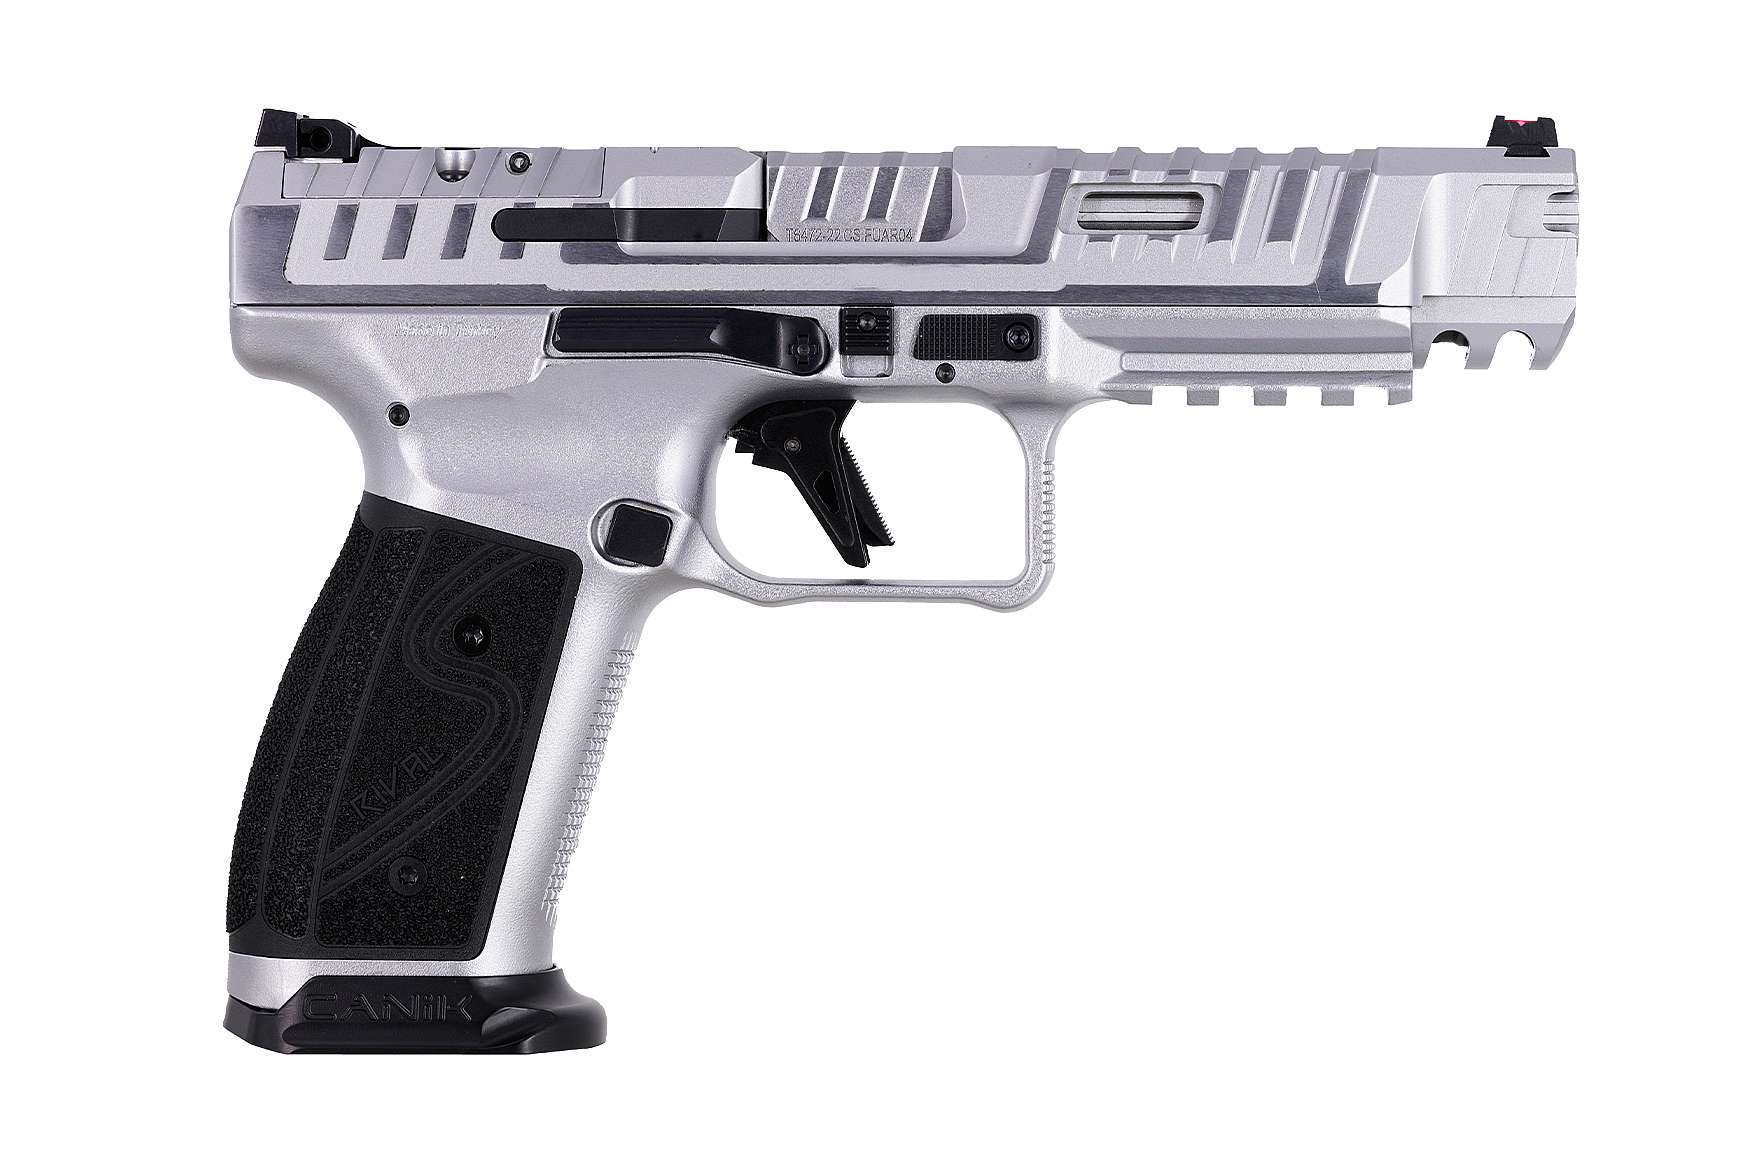 Canik pistola semiauto. mod. SFx RIVAL-S Chrome cal. 9x19